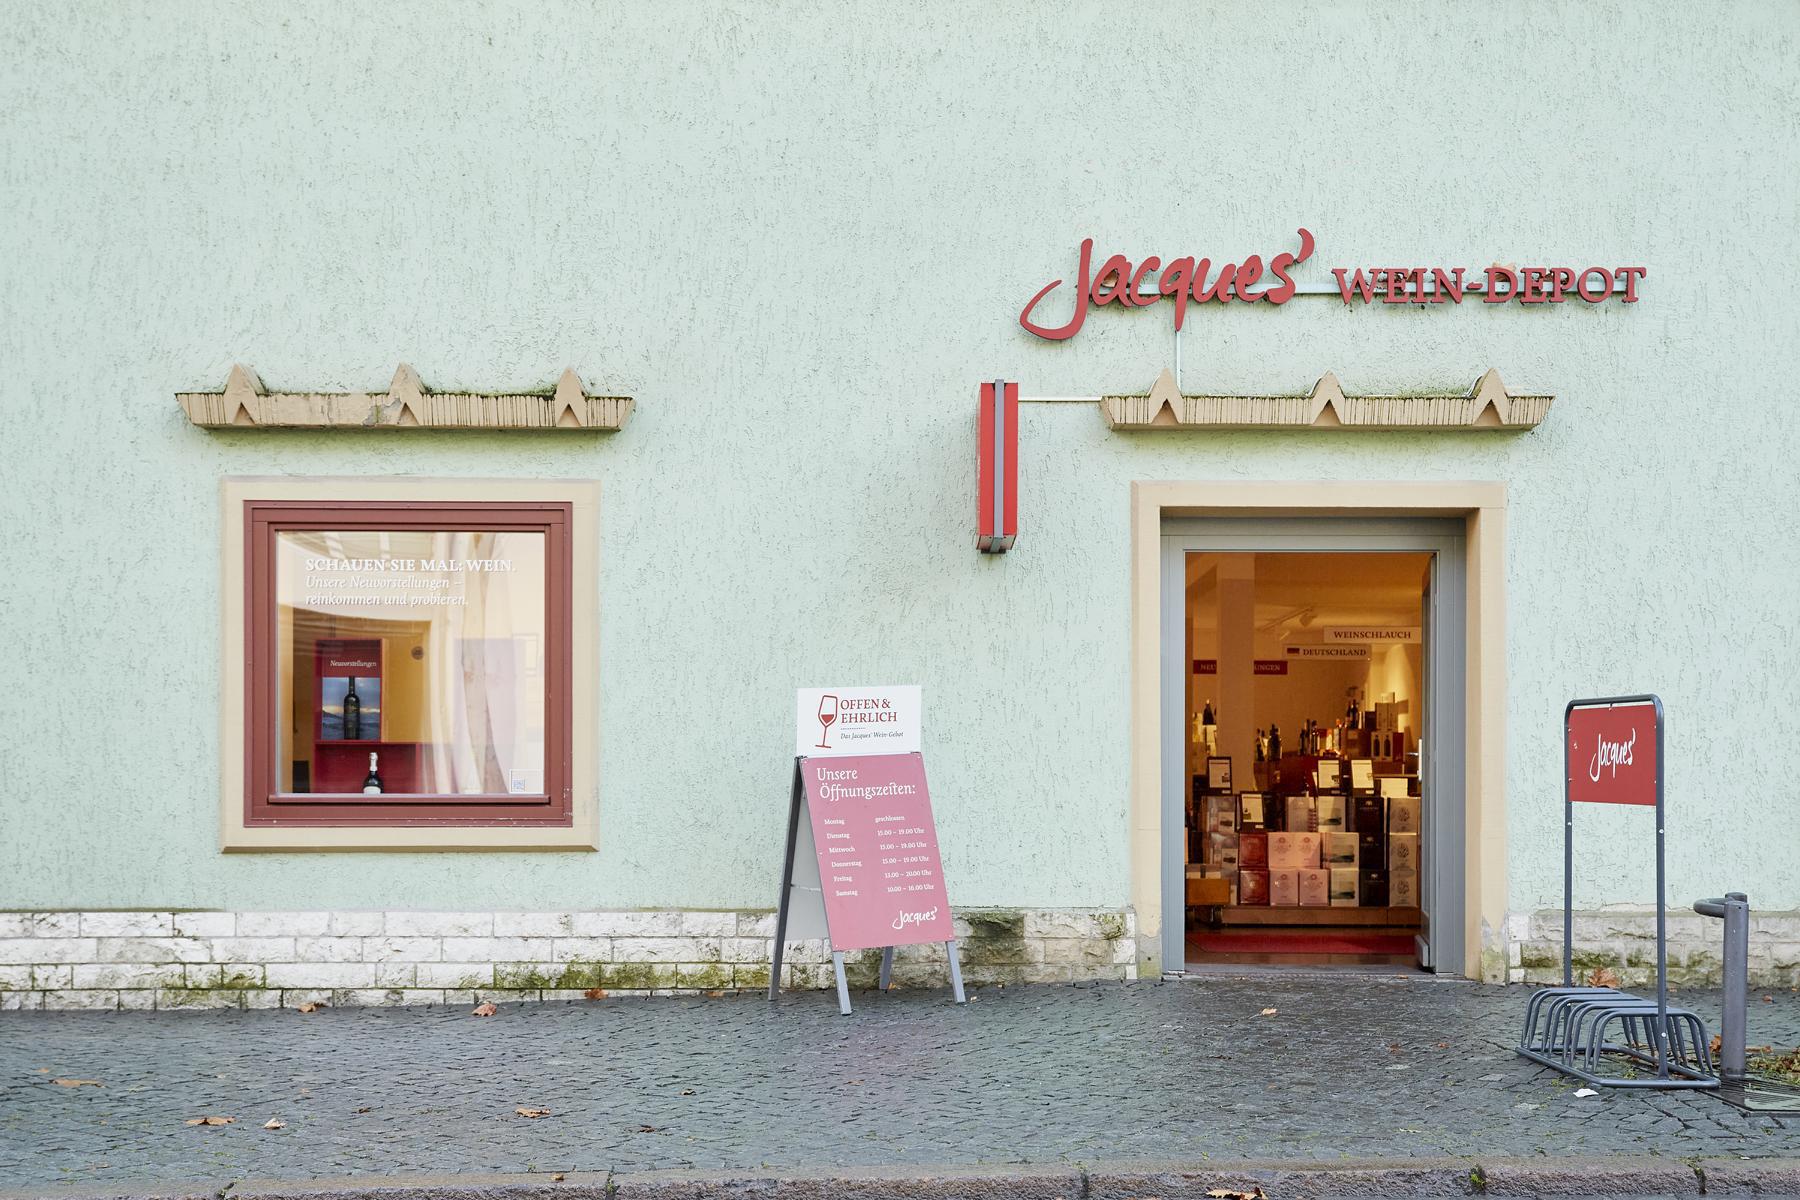 Bild 1 Jacques’ Wein-Depot Jena in Jena